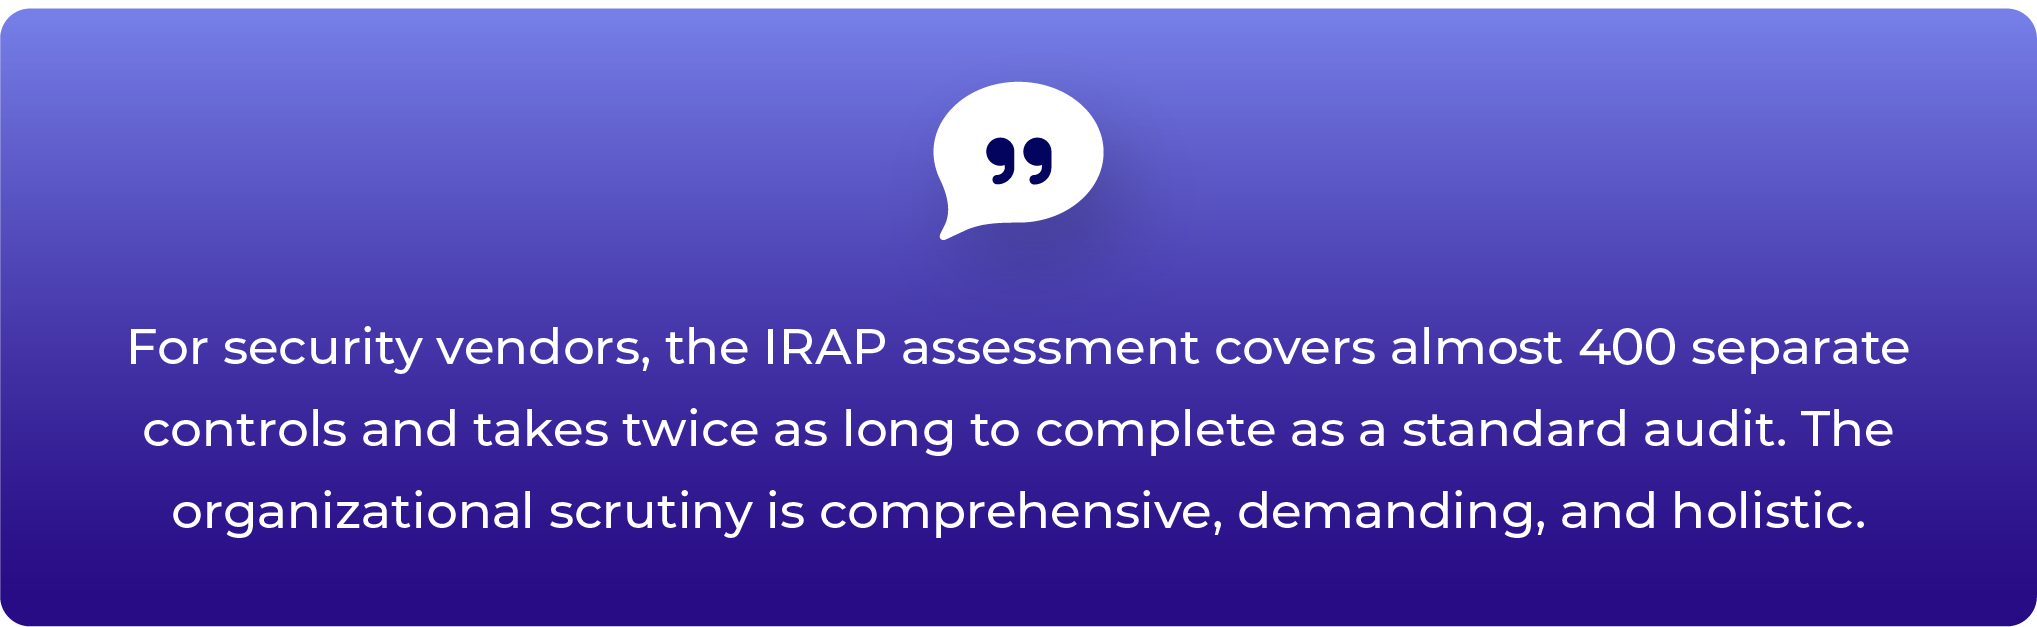 irap-assessment-quote-1